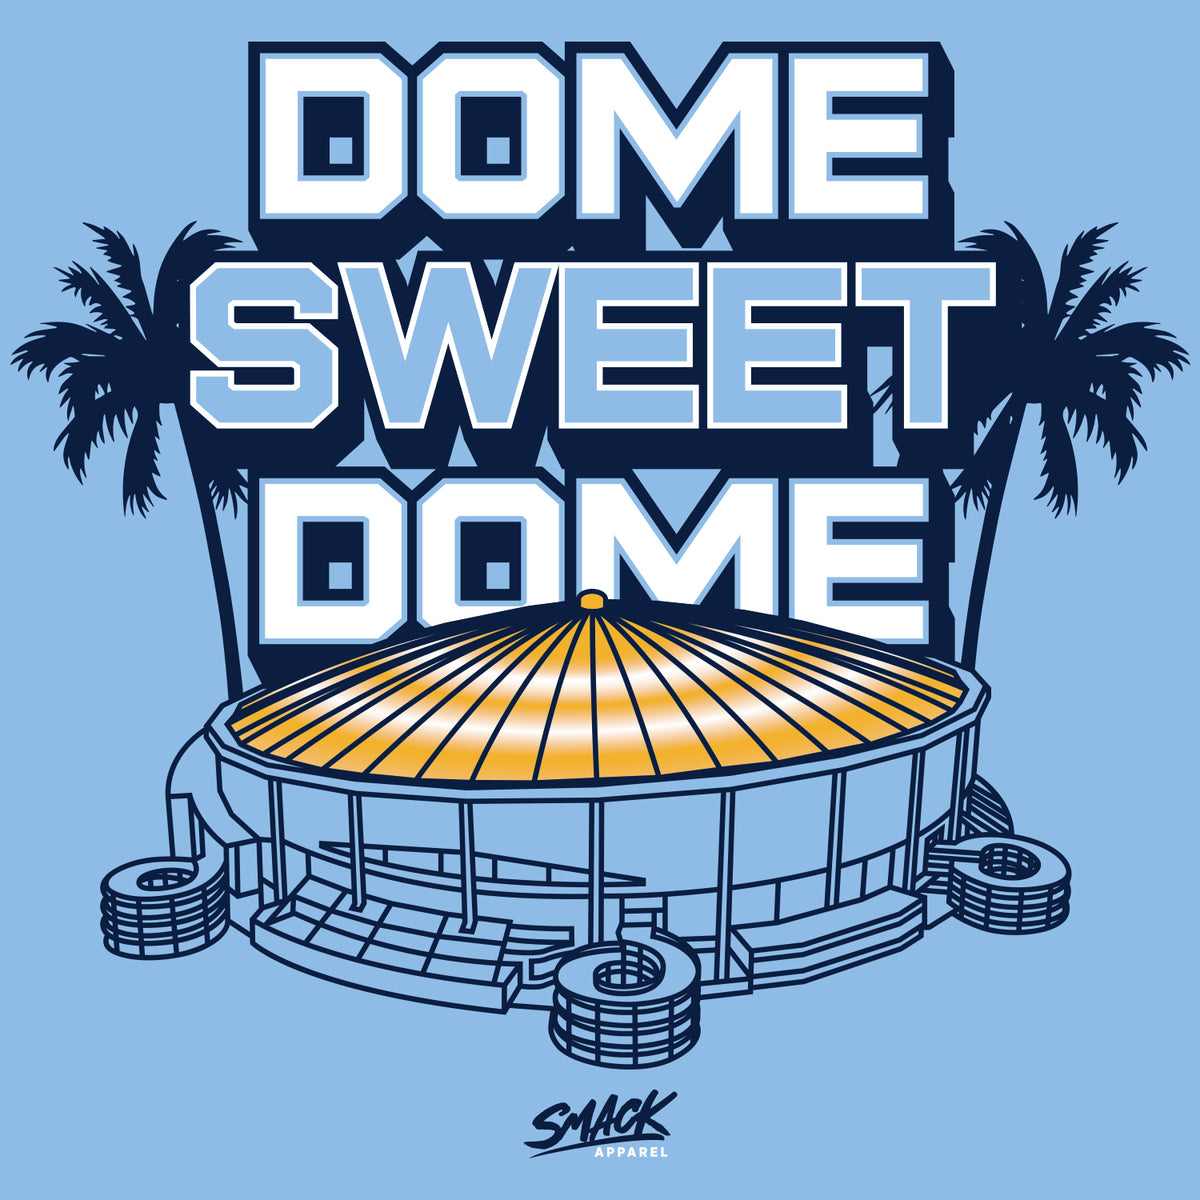 Tampa Bay Victory Pose T-Shirt for TB Baseball Fans (SM-5XL